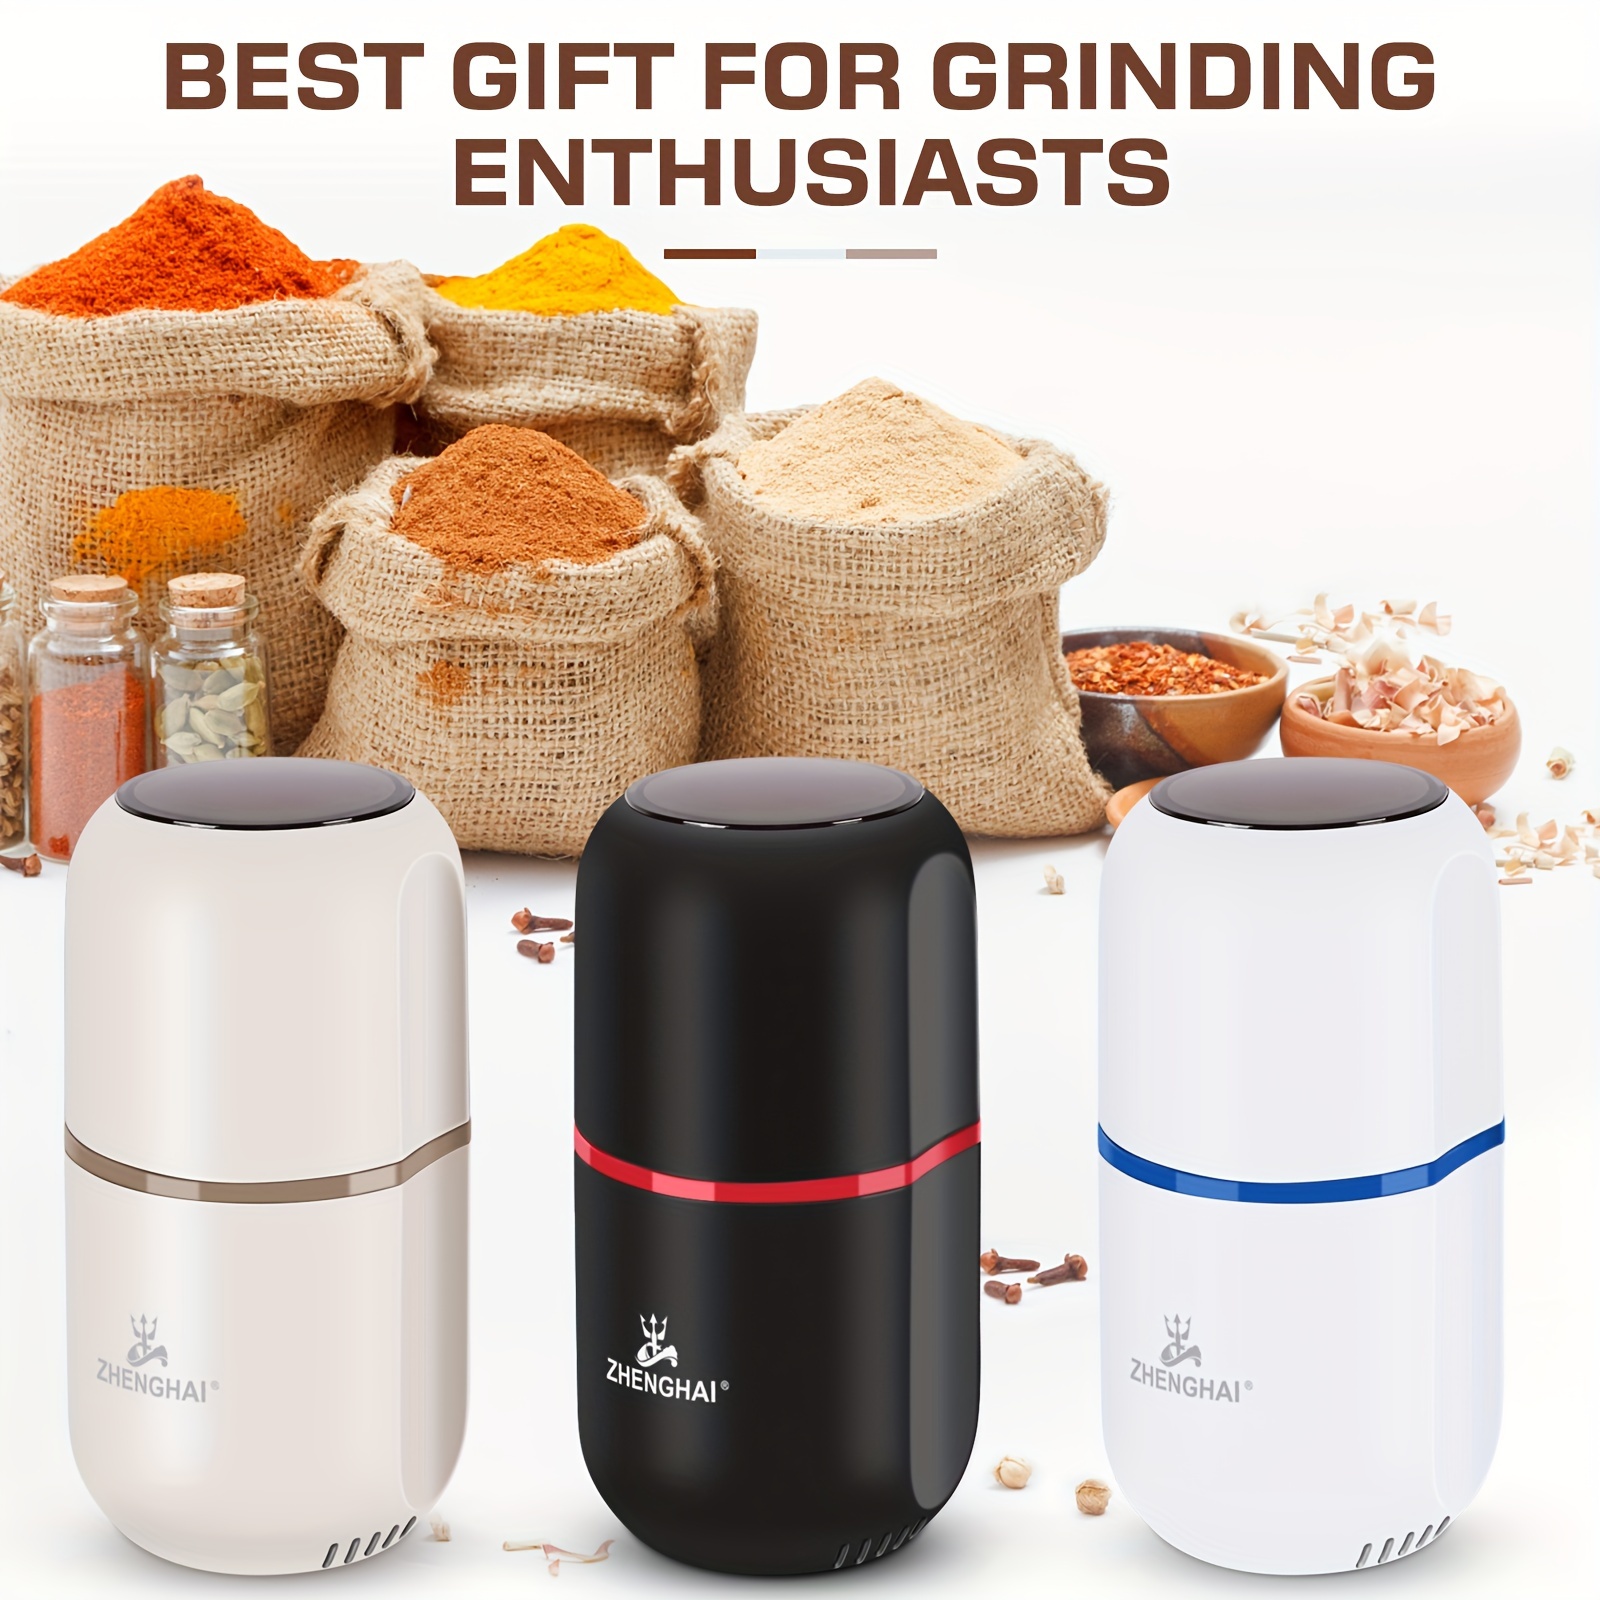 Zhenghai Electric Spice Grinder, Coffee Grinder Large Capacity